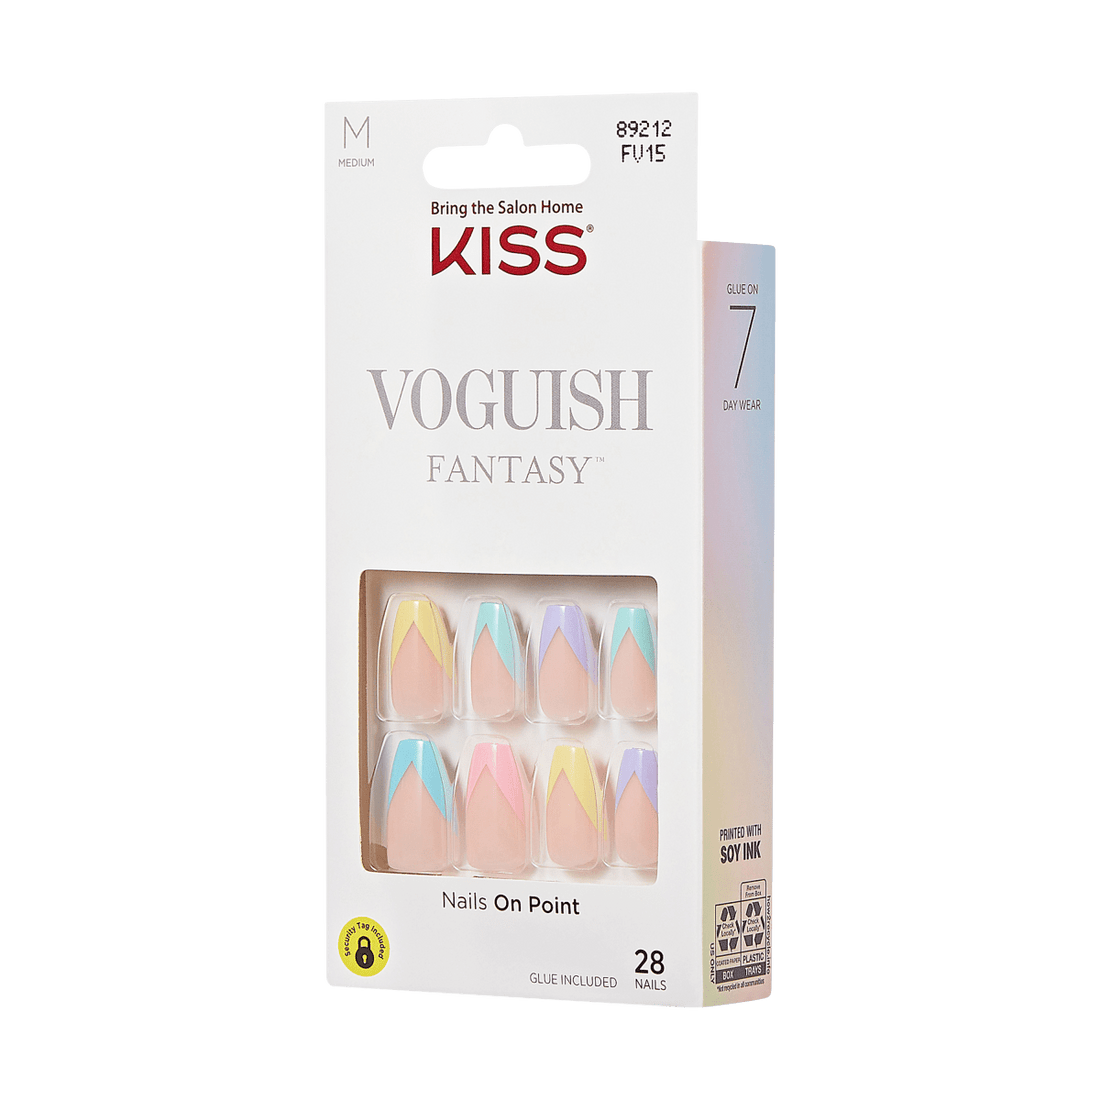 KISS Voguish Fantasy Nails- Candies